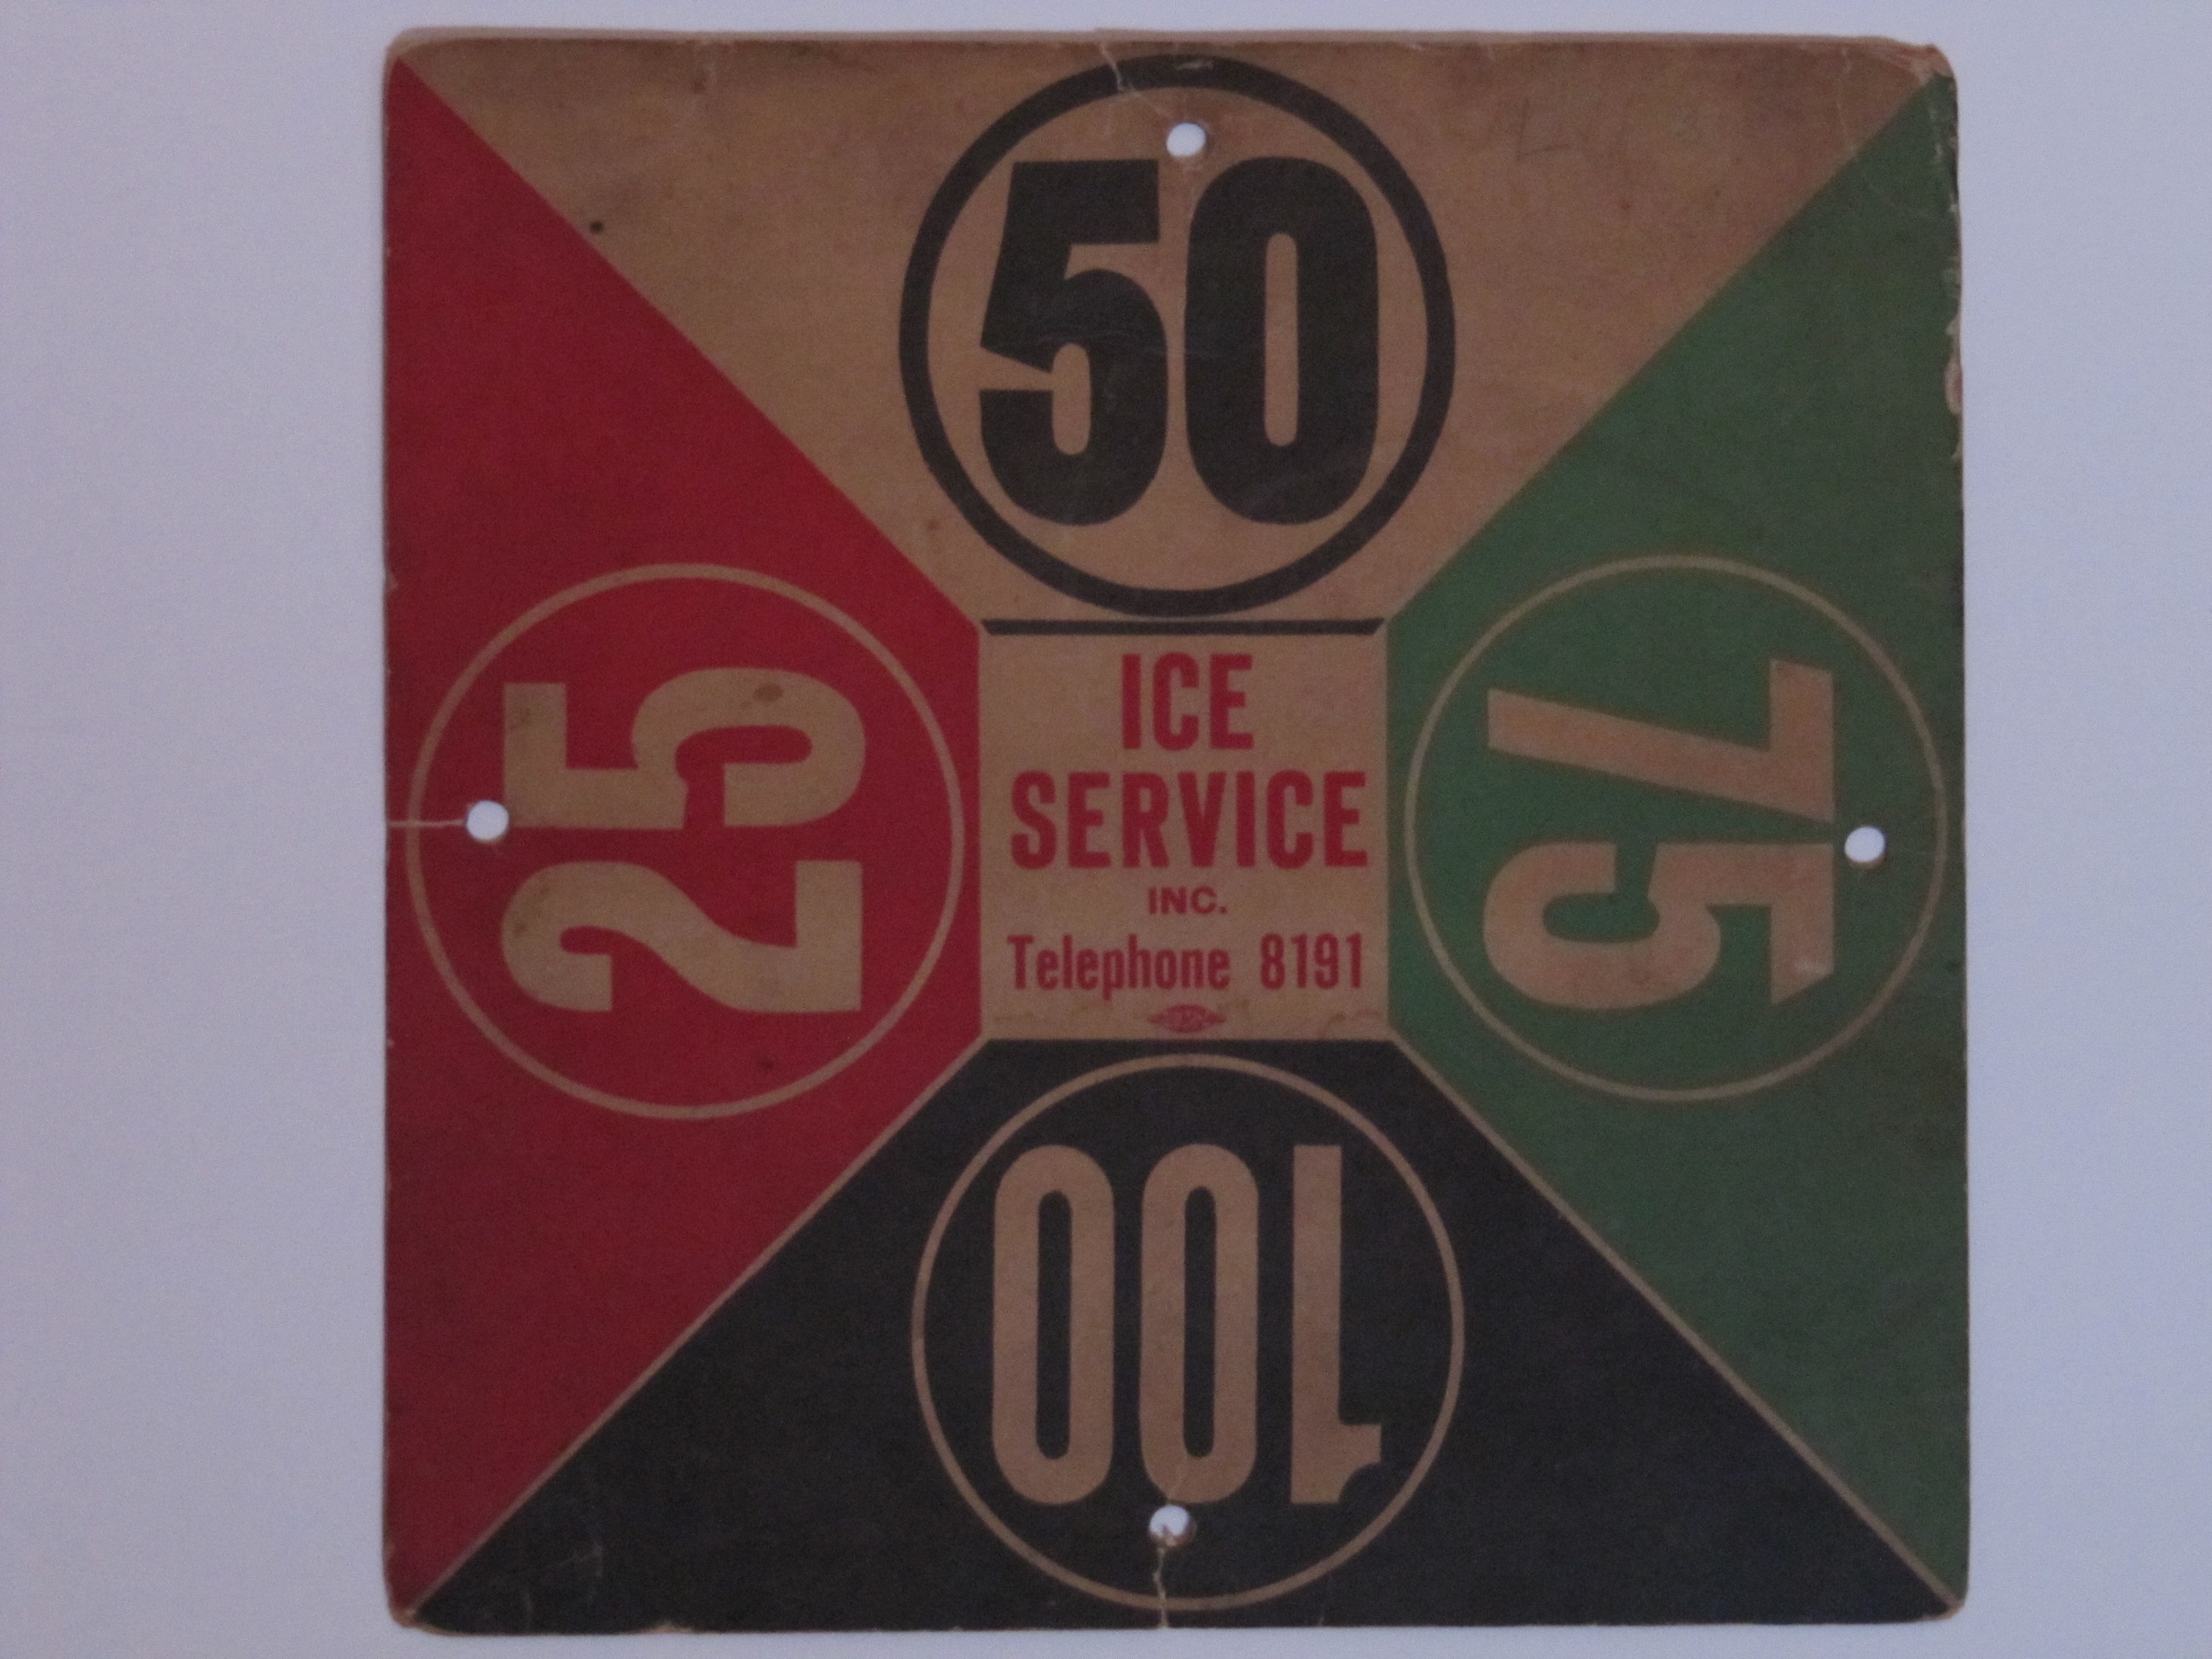 Ice Service 8191